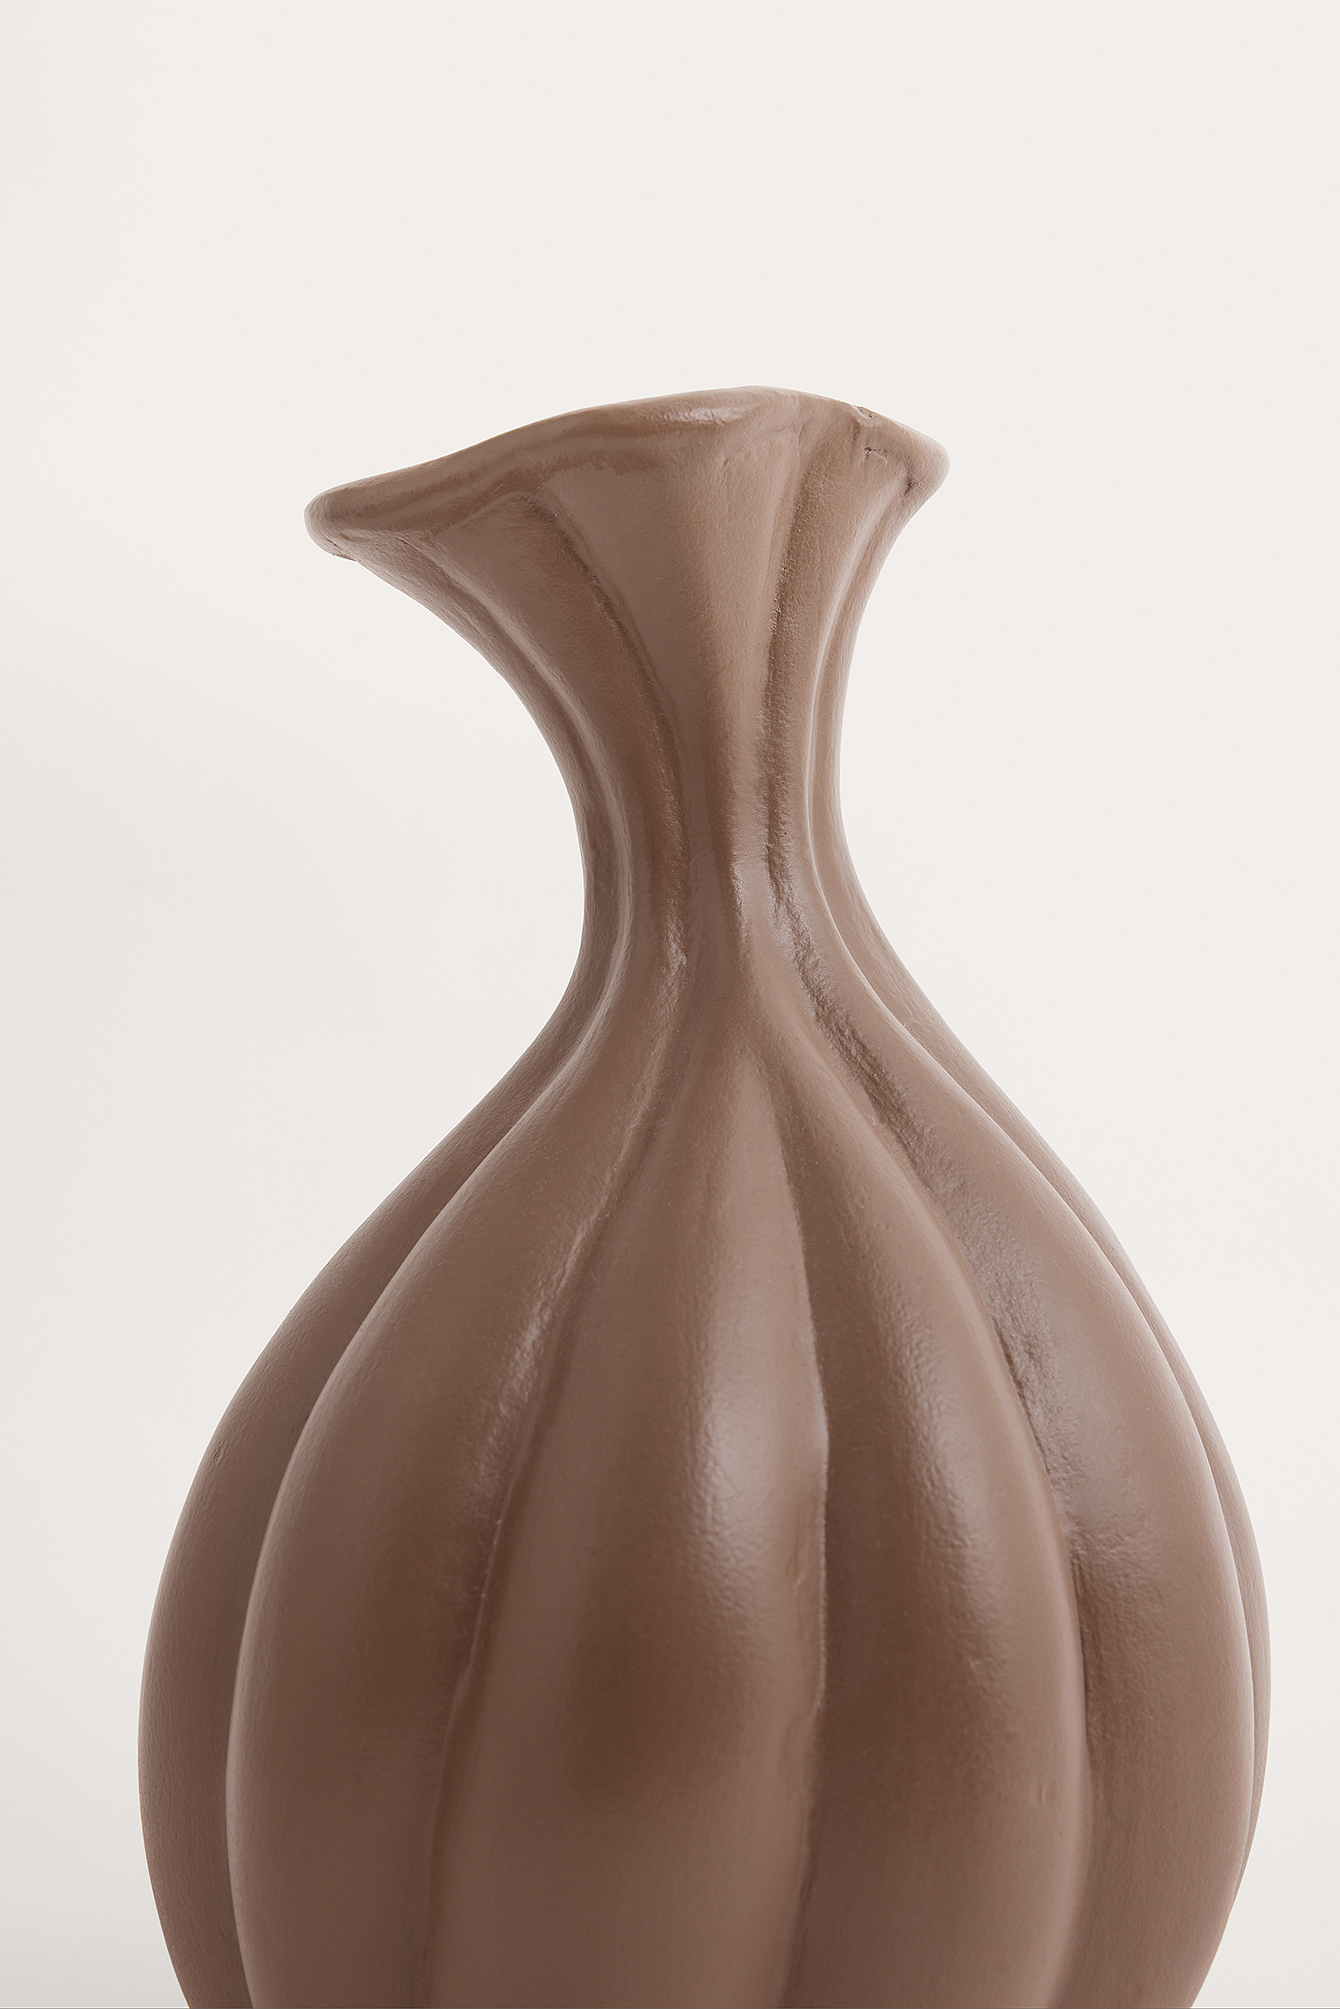 Brown Vase grande taille écologique